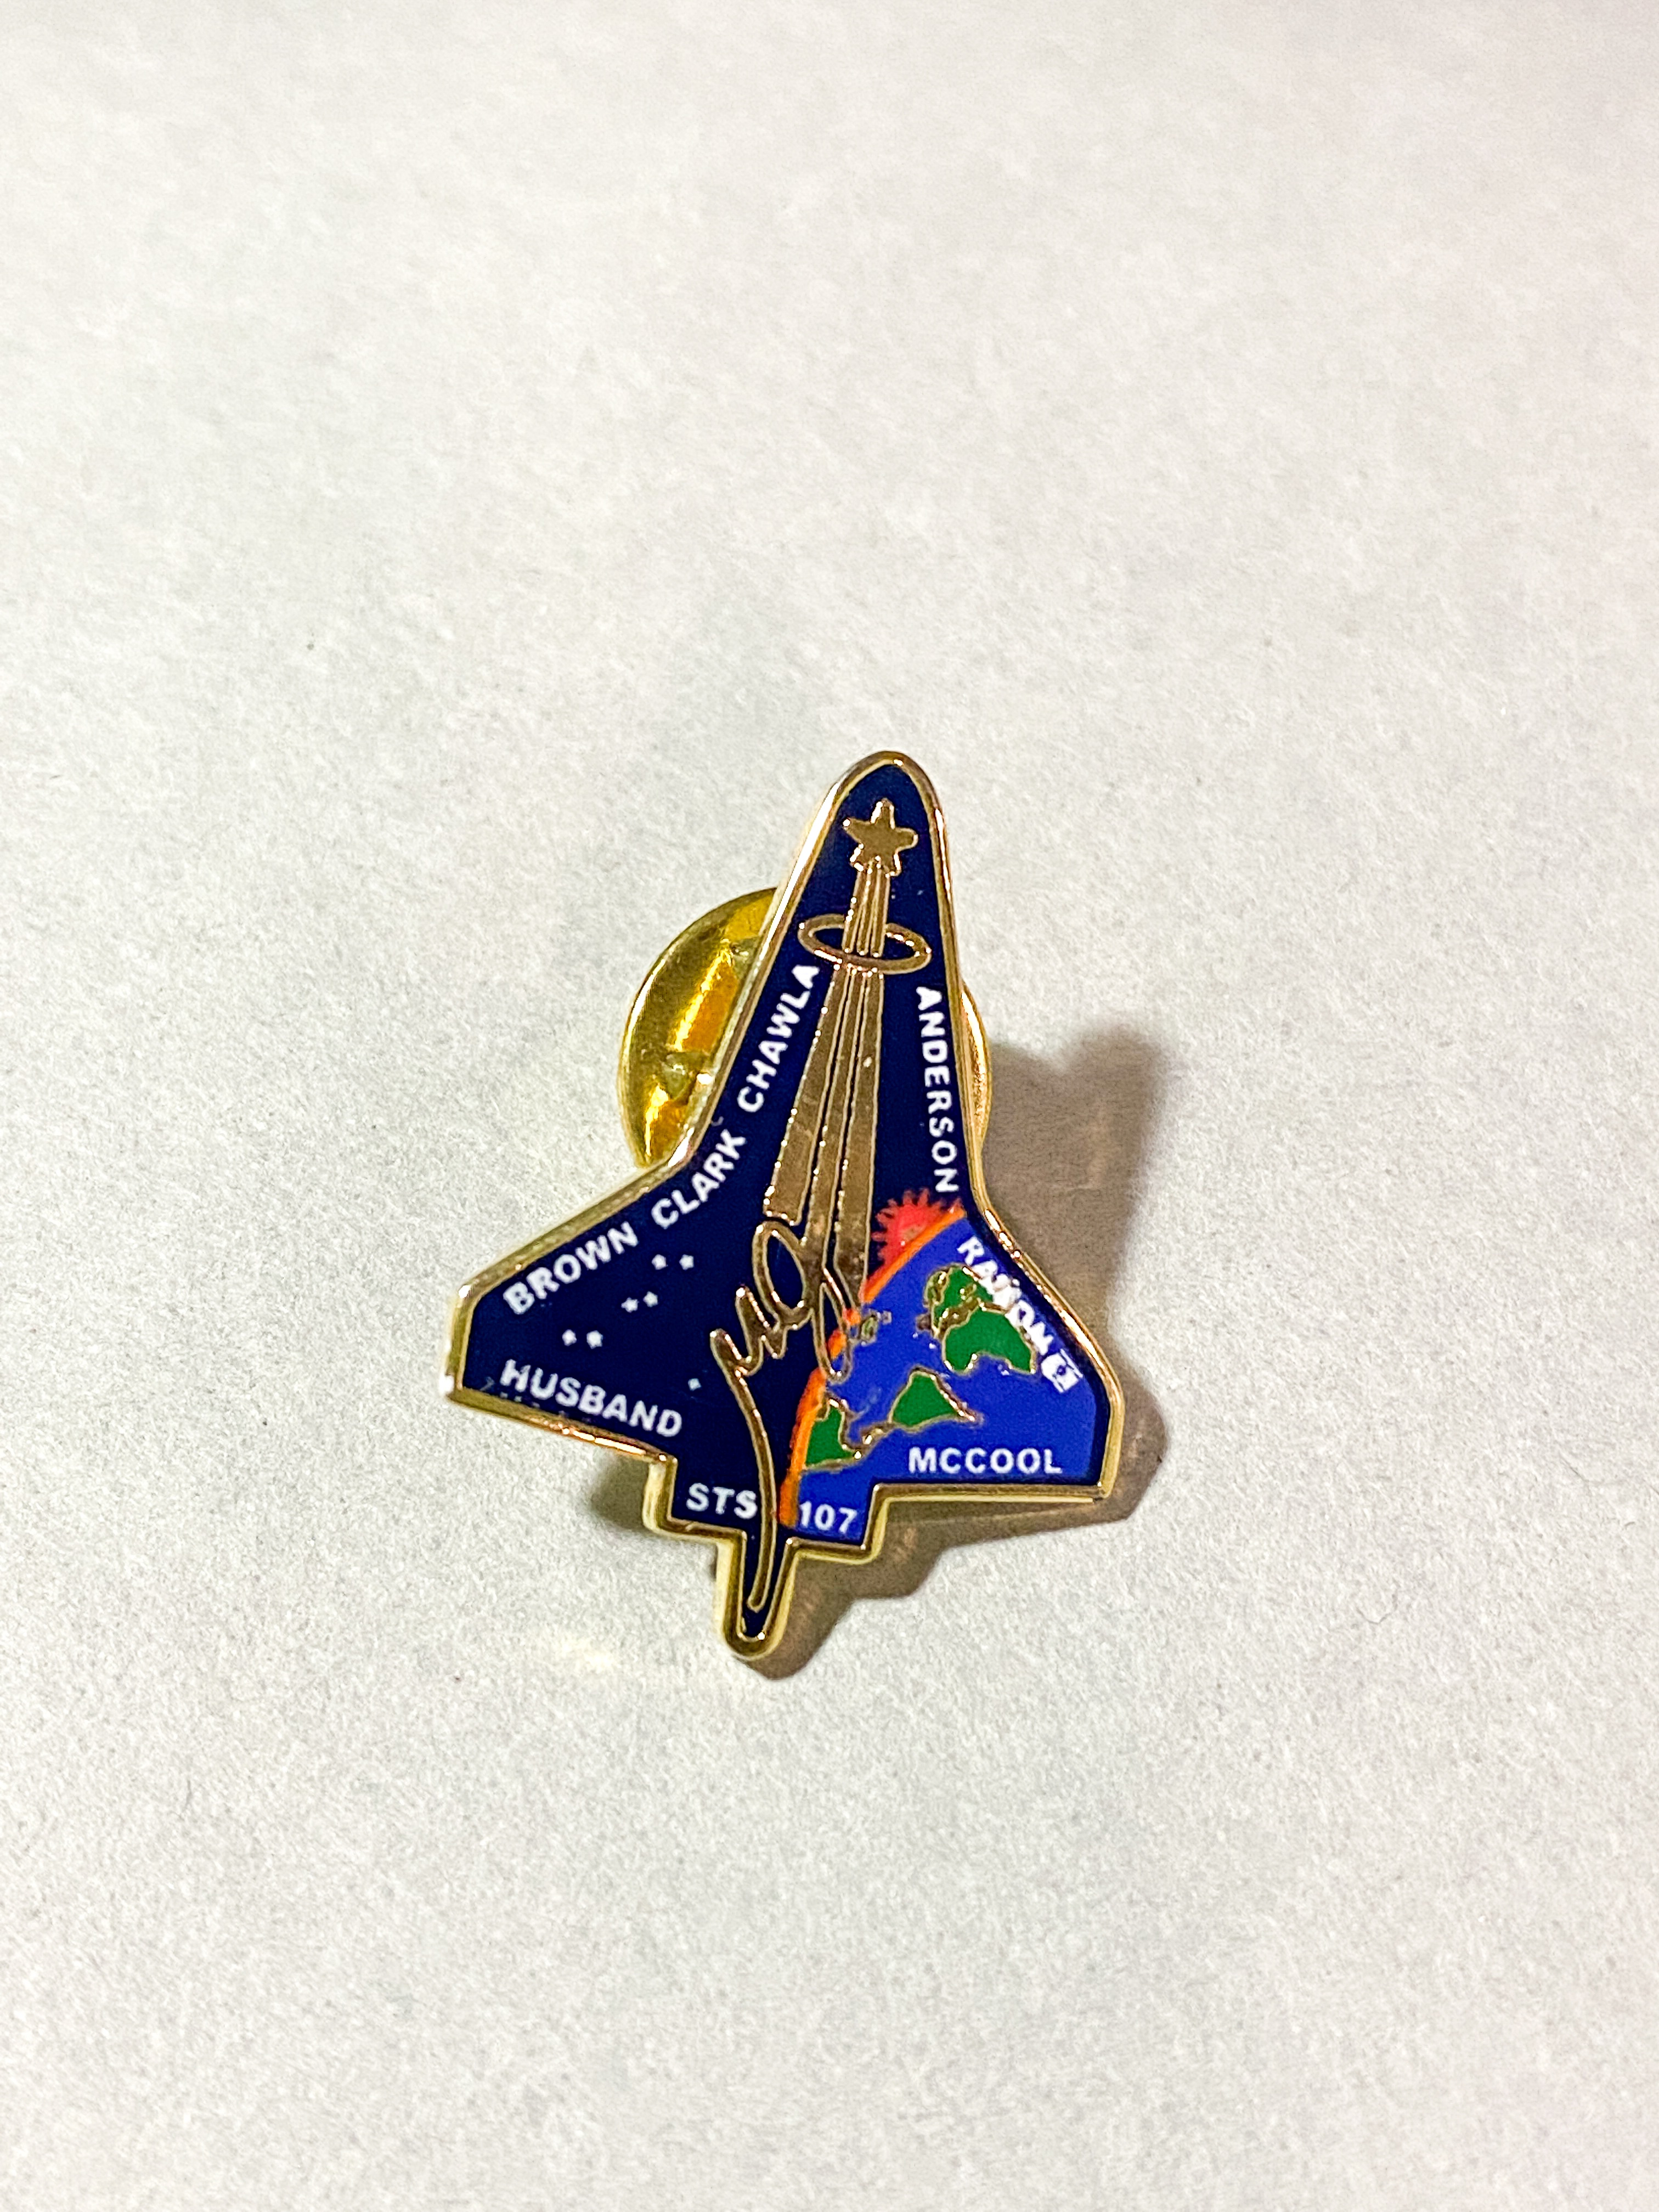 A brass lapel pin shaped like a NASA rocket that belonged to Ruth Kirschstein